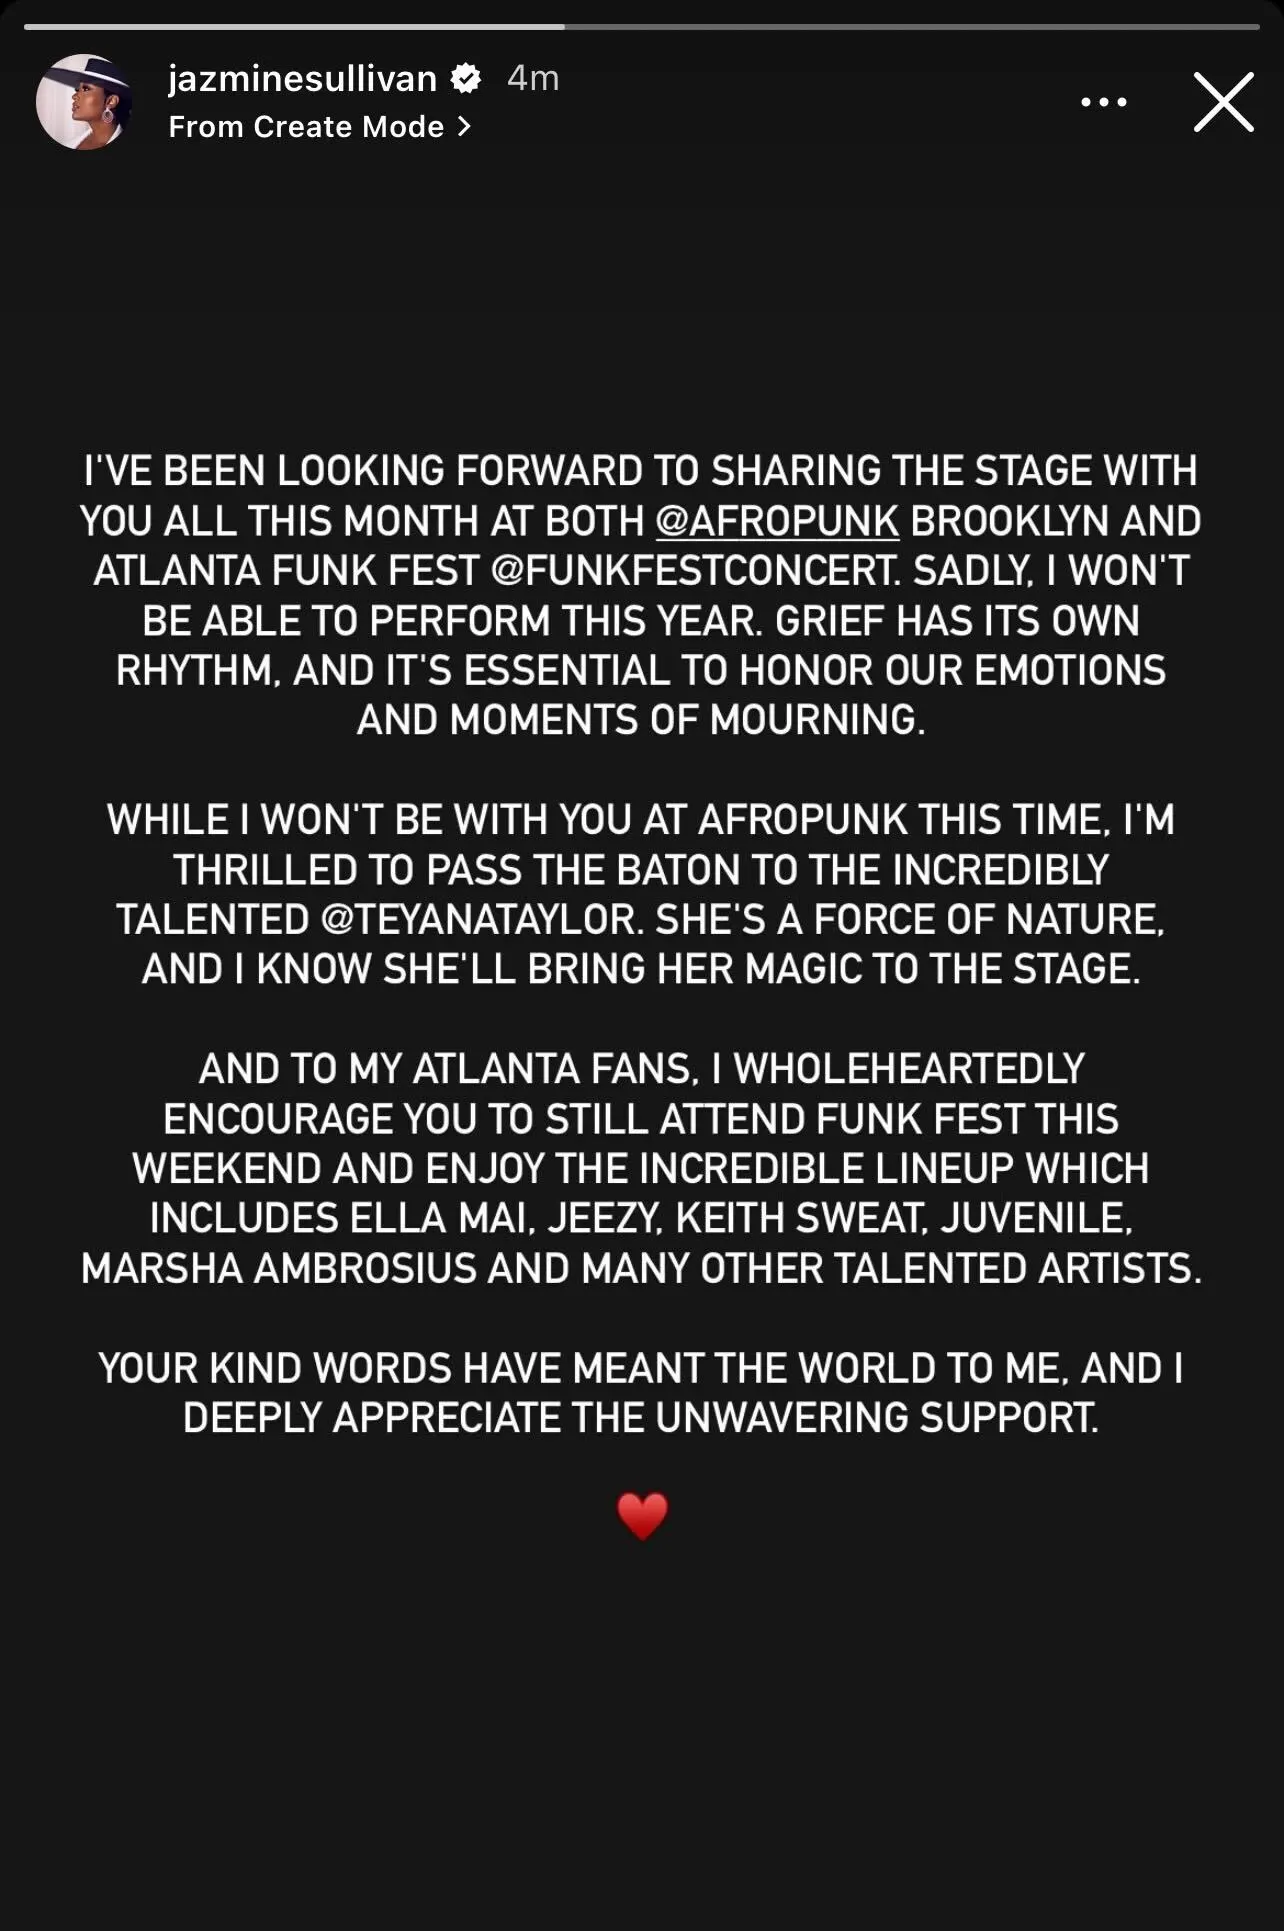 Jazmine Sullivan AFROPUNK Performance Canceled Amidst Grief